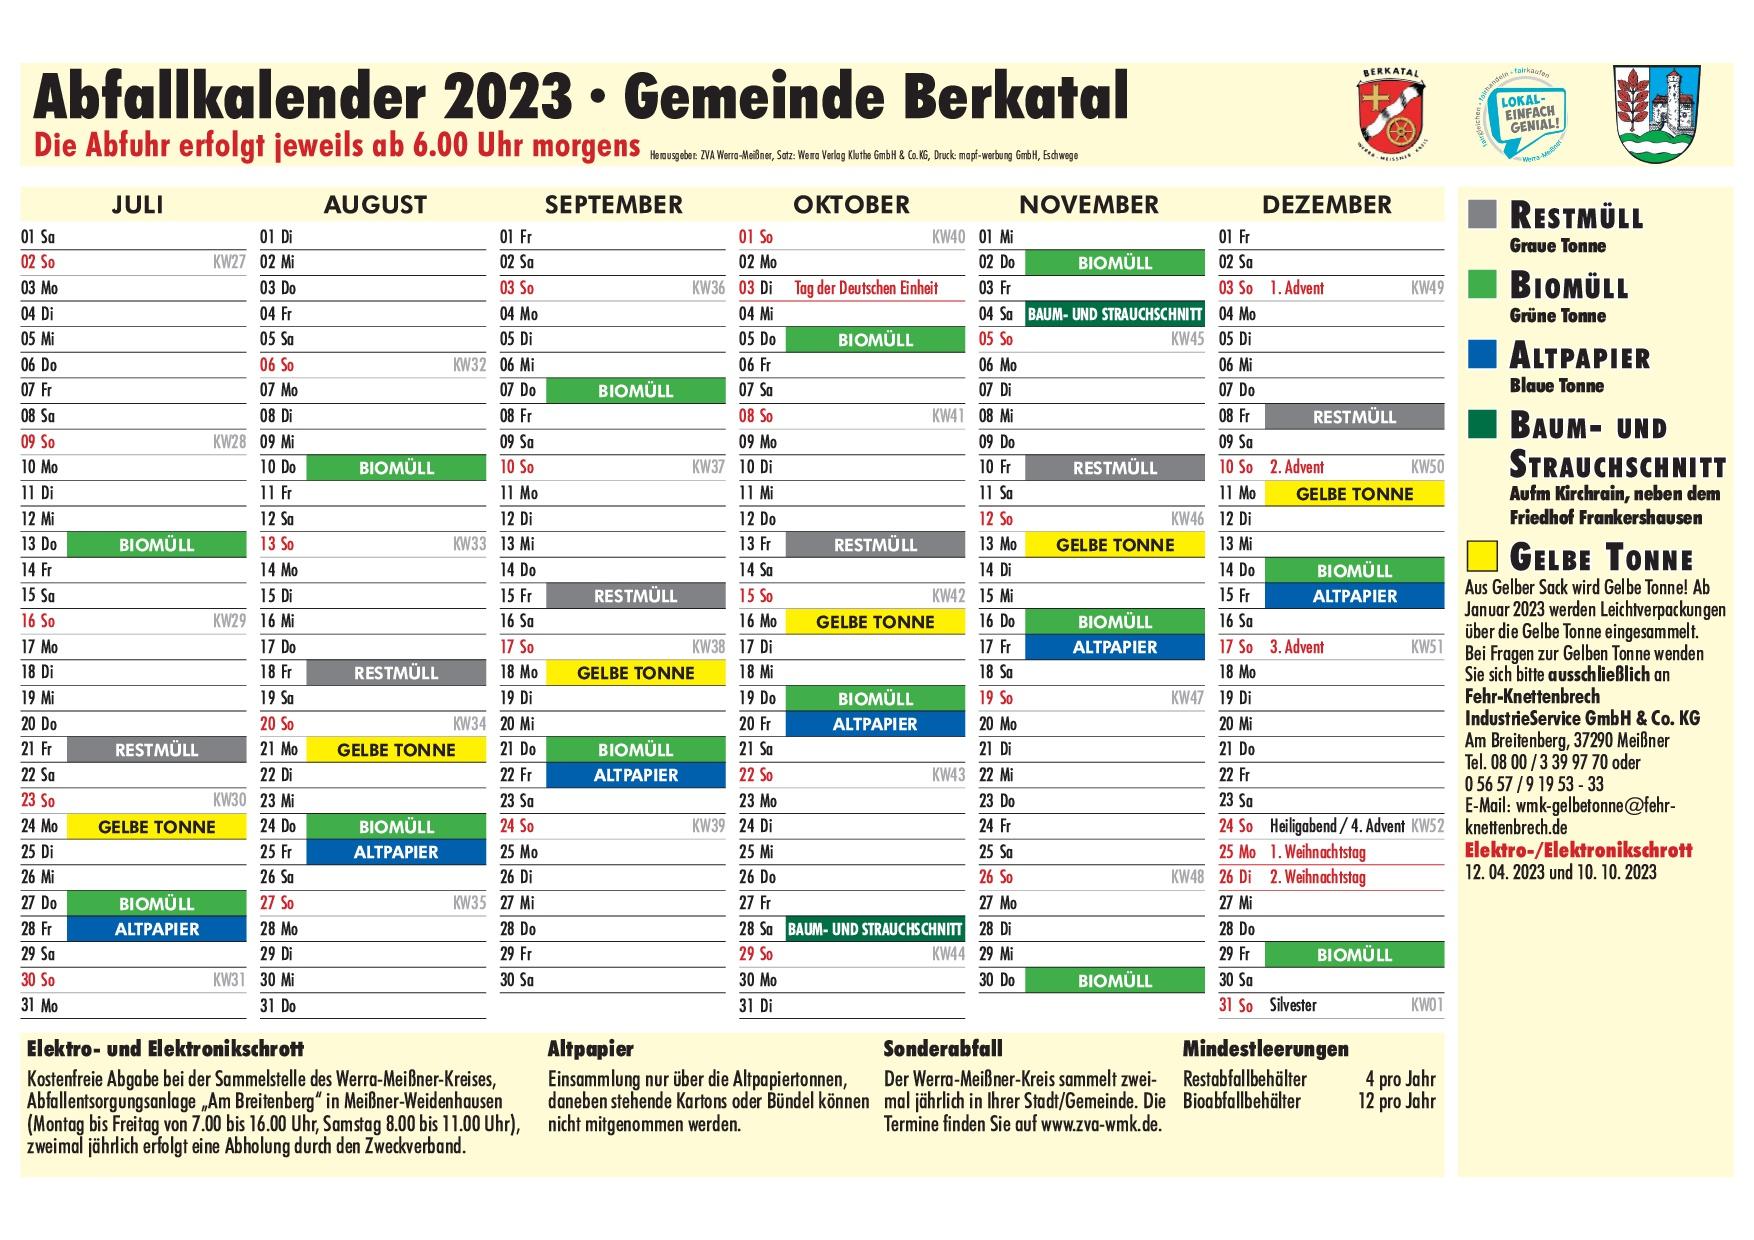 Abfallkalender 2. HJ 2023